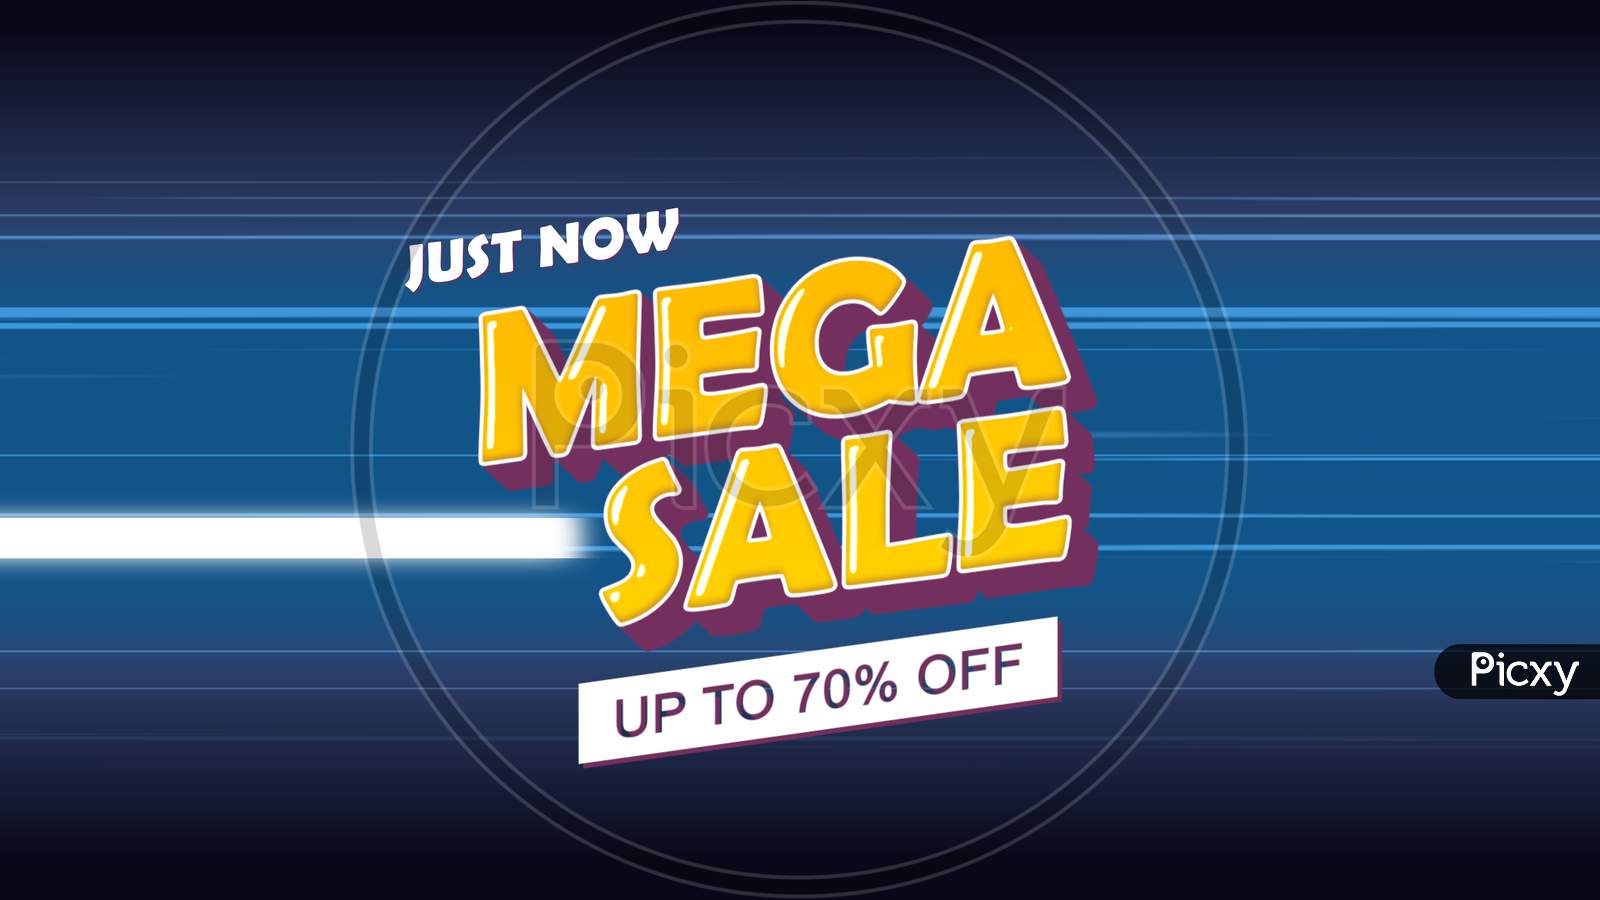 Just Now Mega Sale Up To 70% Off Word Illustration Use For Landing Page,Website, Poster, Banner, Flyer,Sale Promotion,Advertising, Marketing